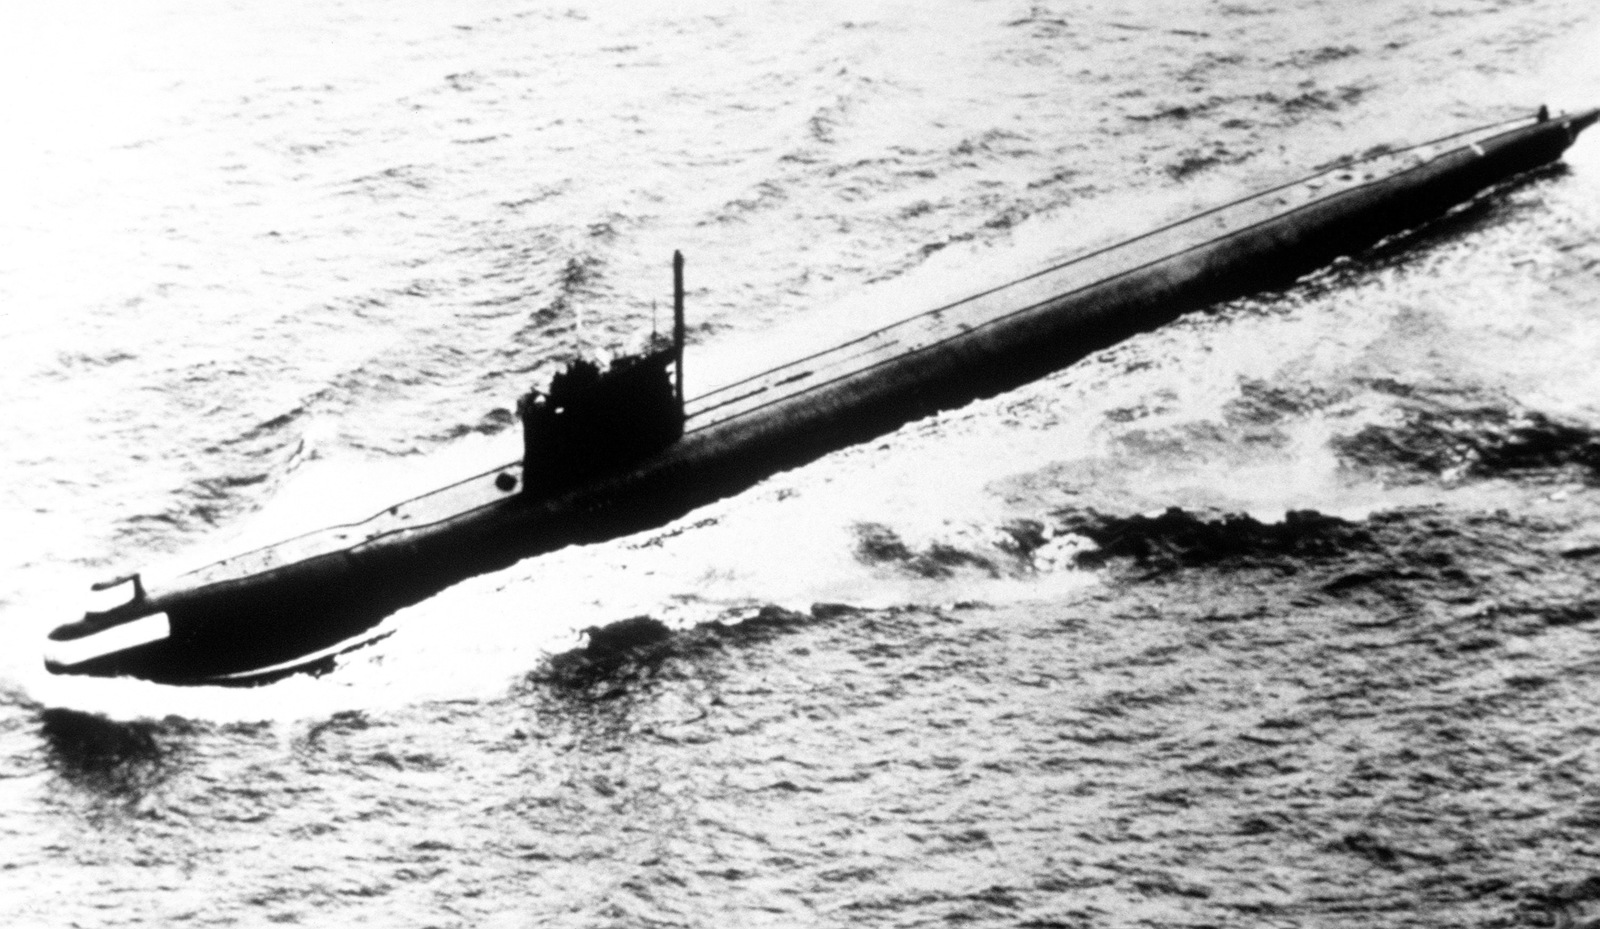 Пл пр т. Подводная лодка пр.659т. АПЛ проекта 659. Атомная подводная лодка к-45. Подводные лодки проекта 659т.